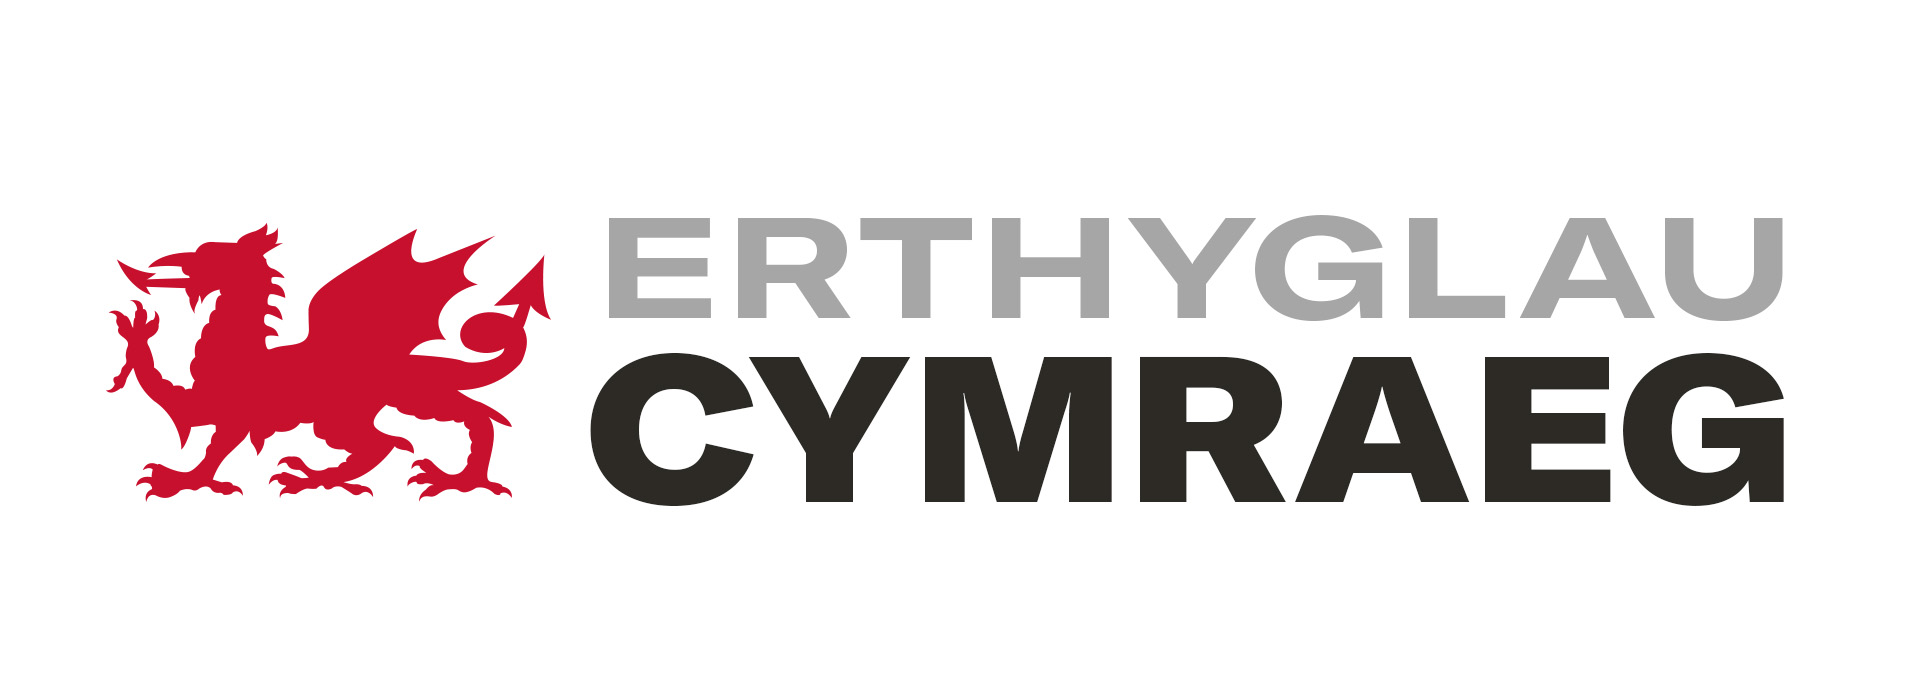 Erthyglau Cymraeg. The Welsh Article.